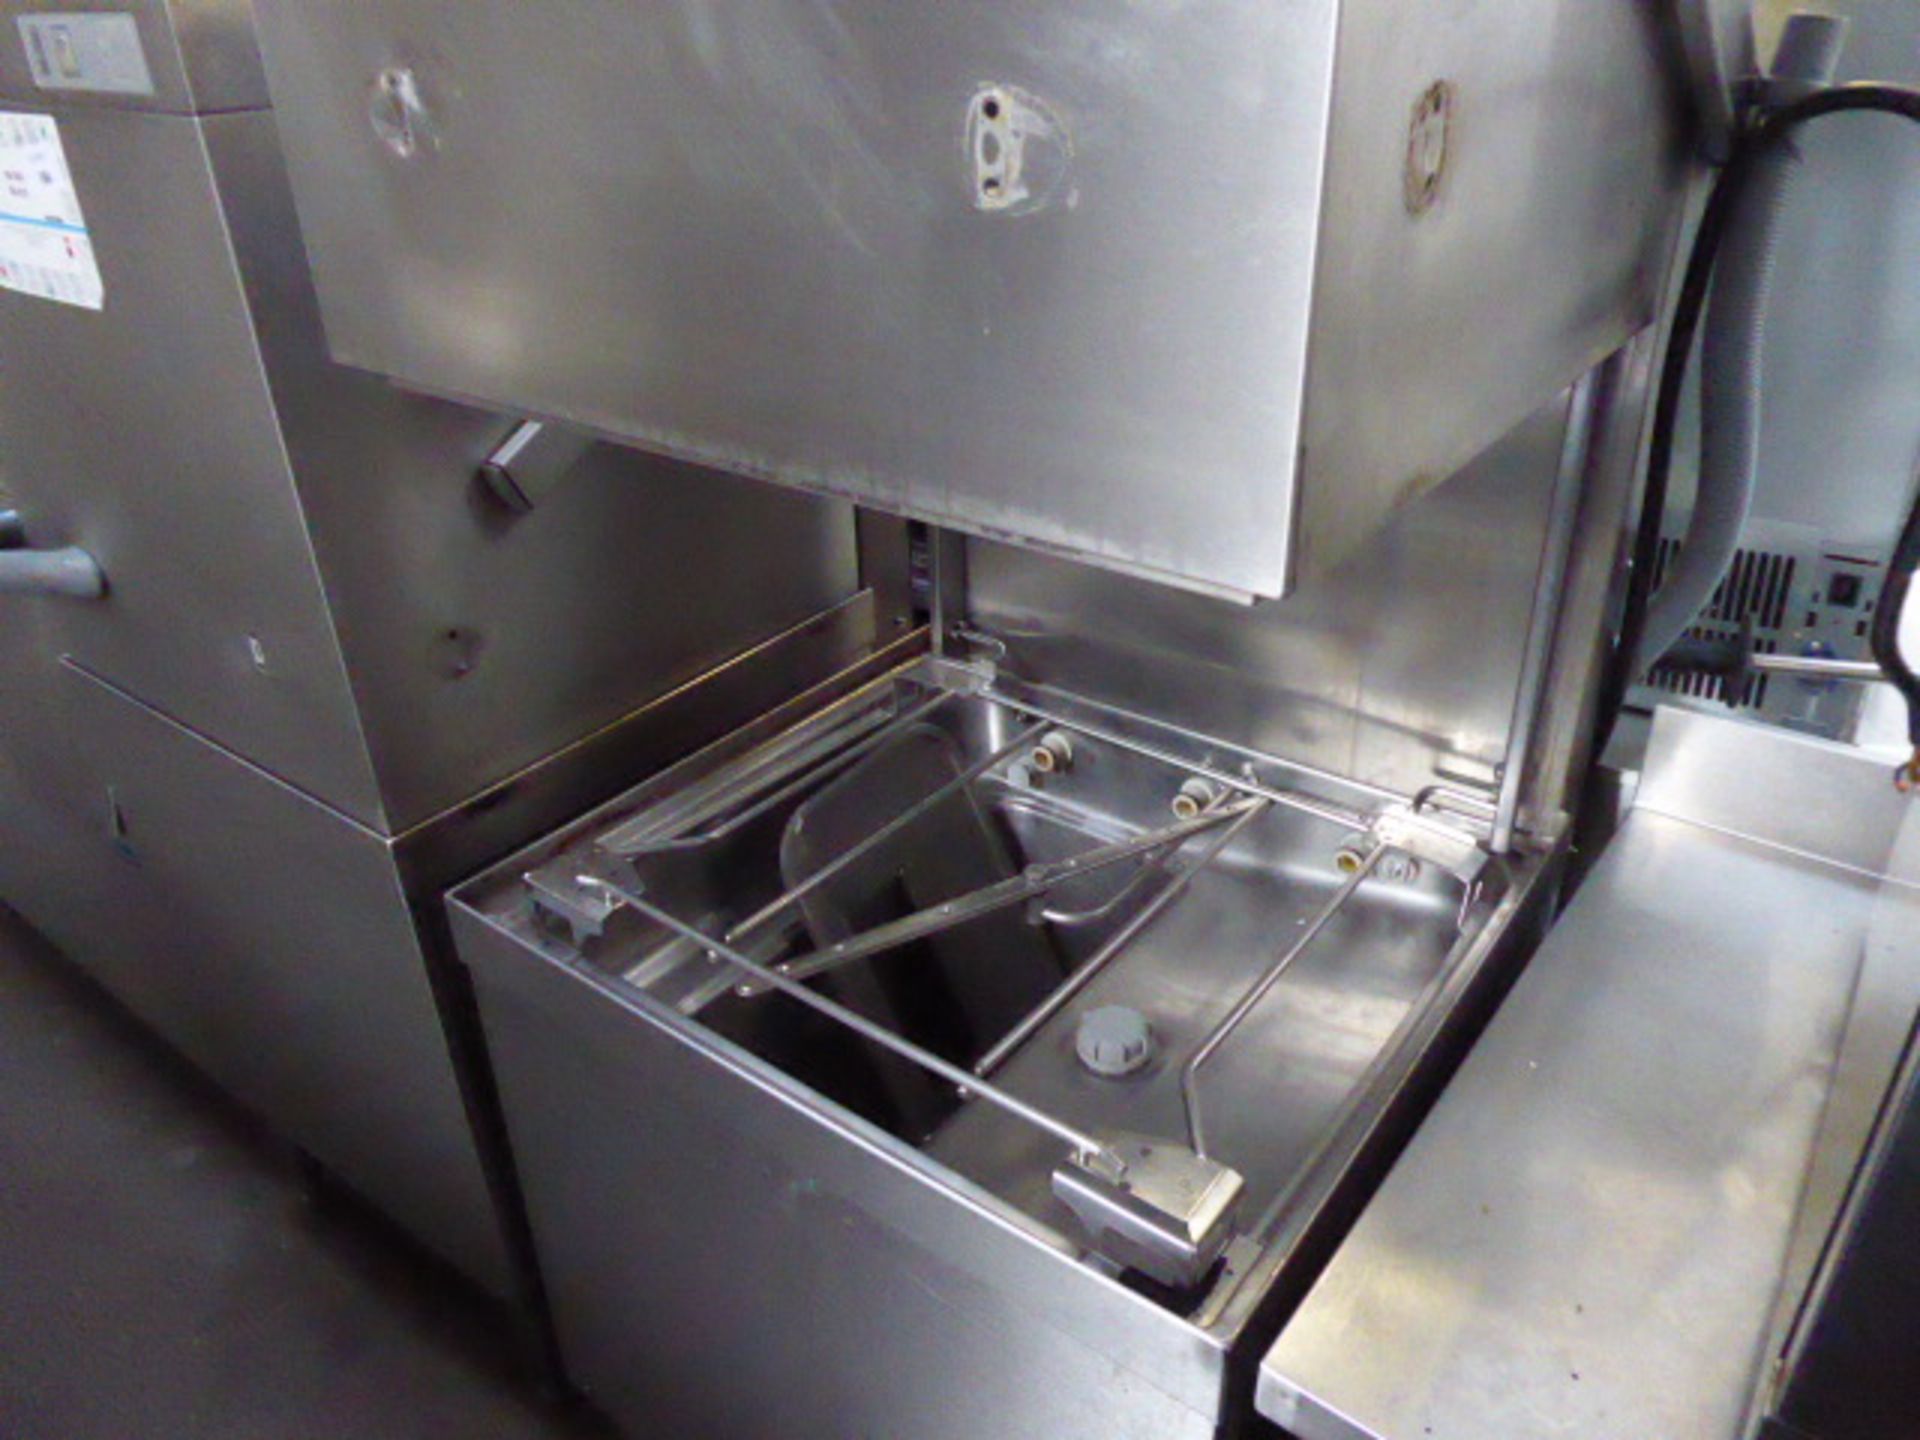 70cm Winterhalter Model GS515 lift top pass through dishwasher - Image 2 of 2